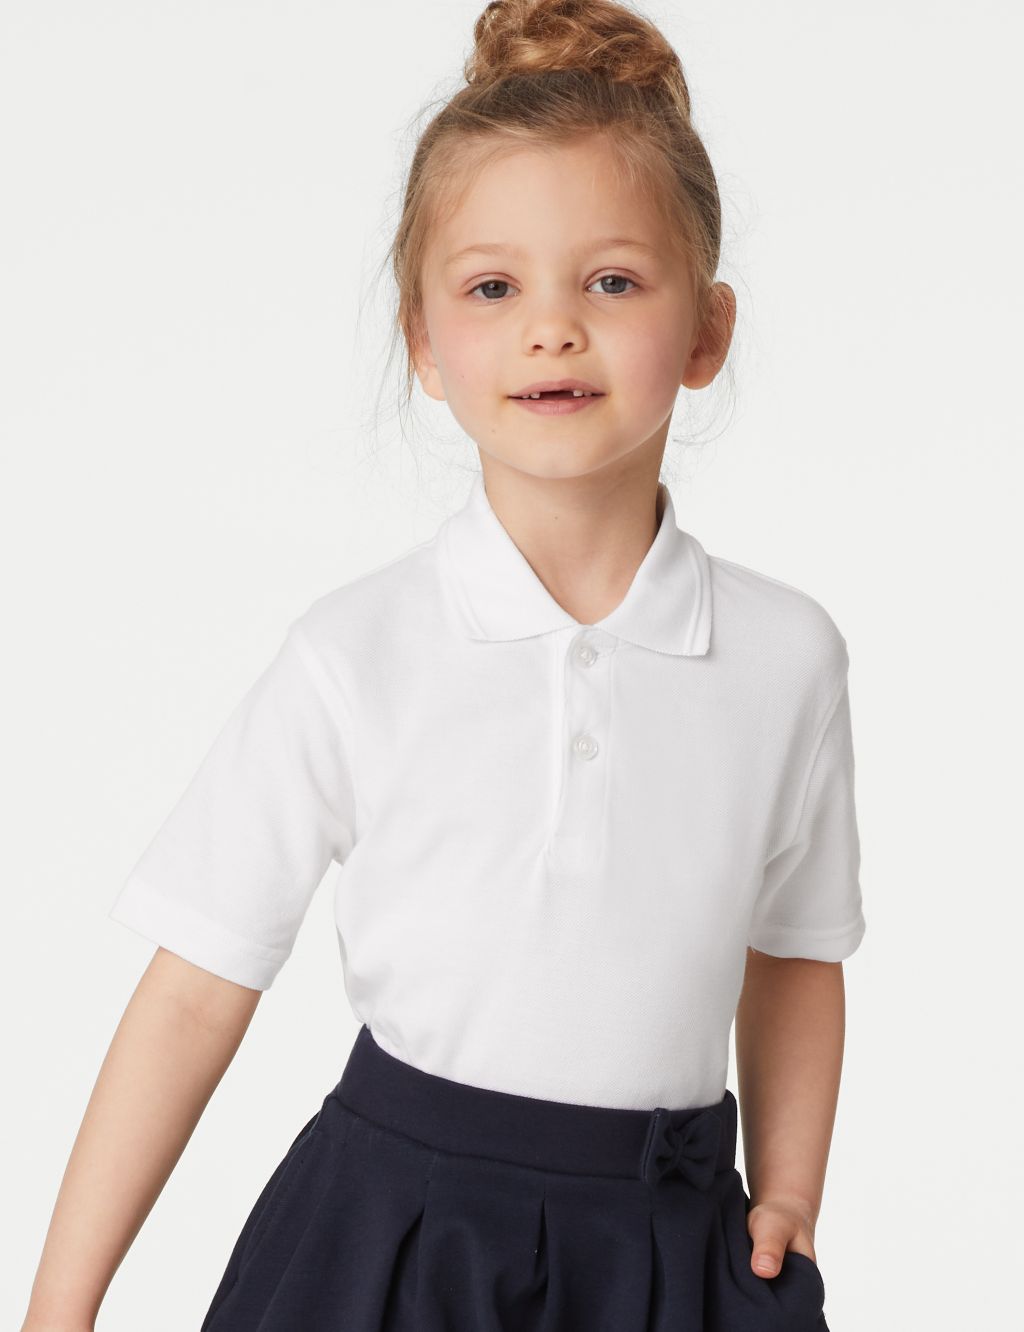 5pk Unisex Pure Cotton School Polo Shirts (2-18 Yrs) image 3